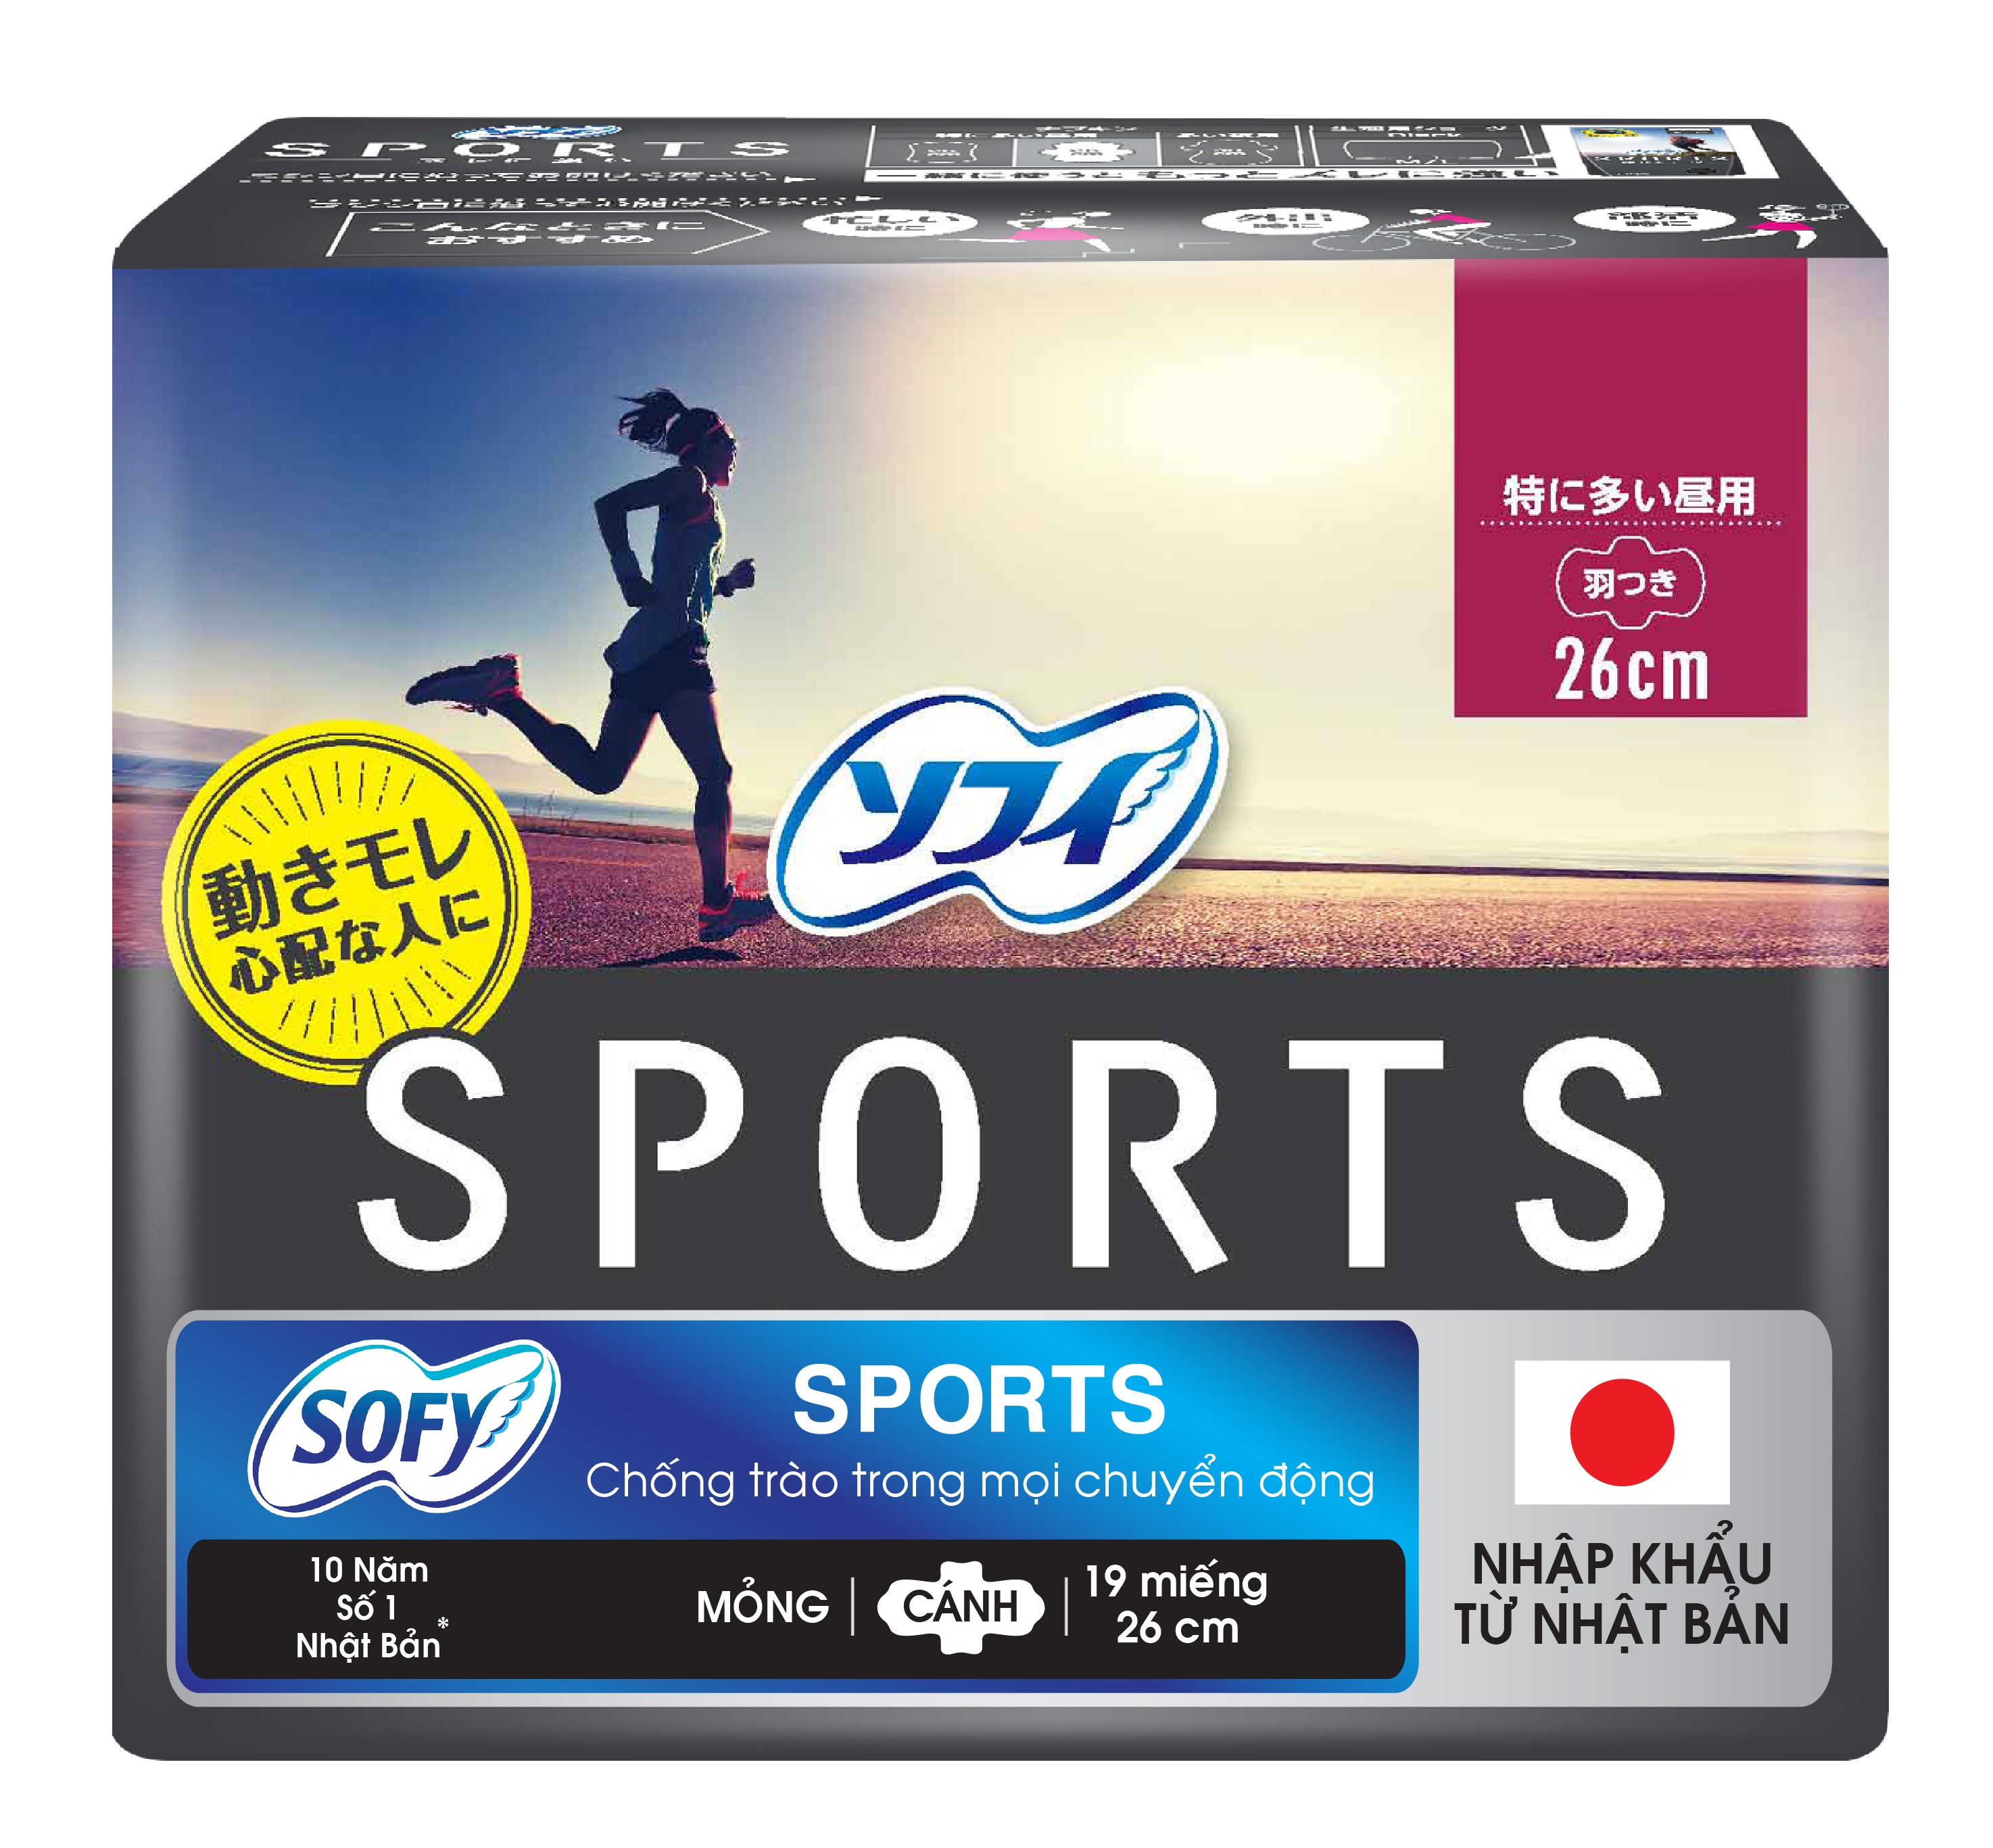 SOFY Sports 26cm